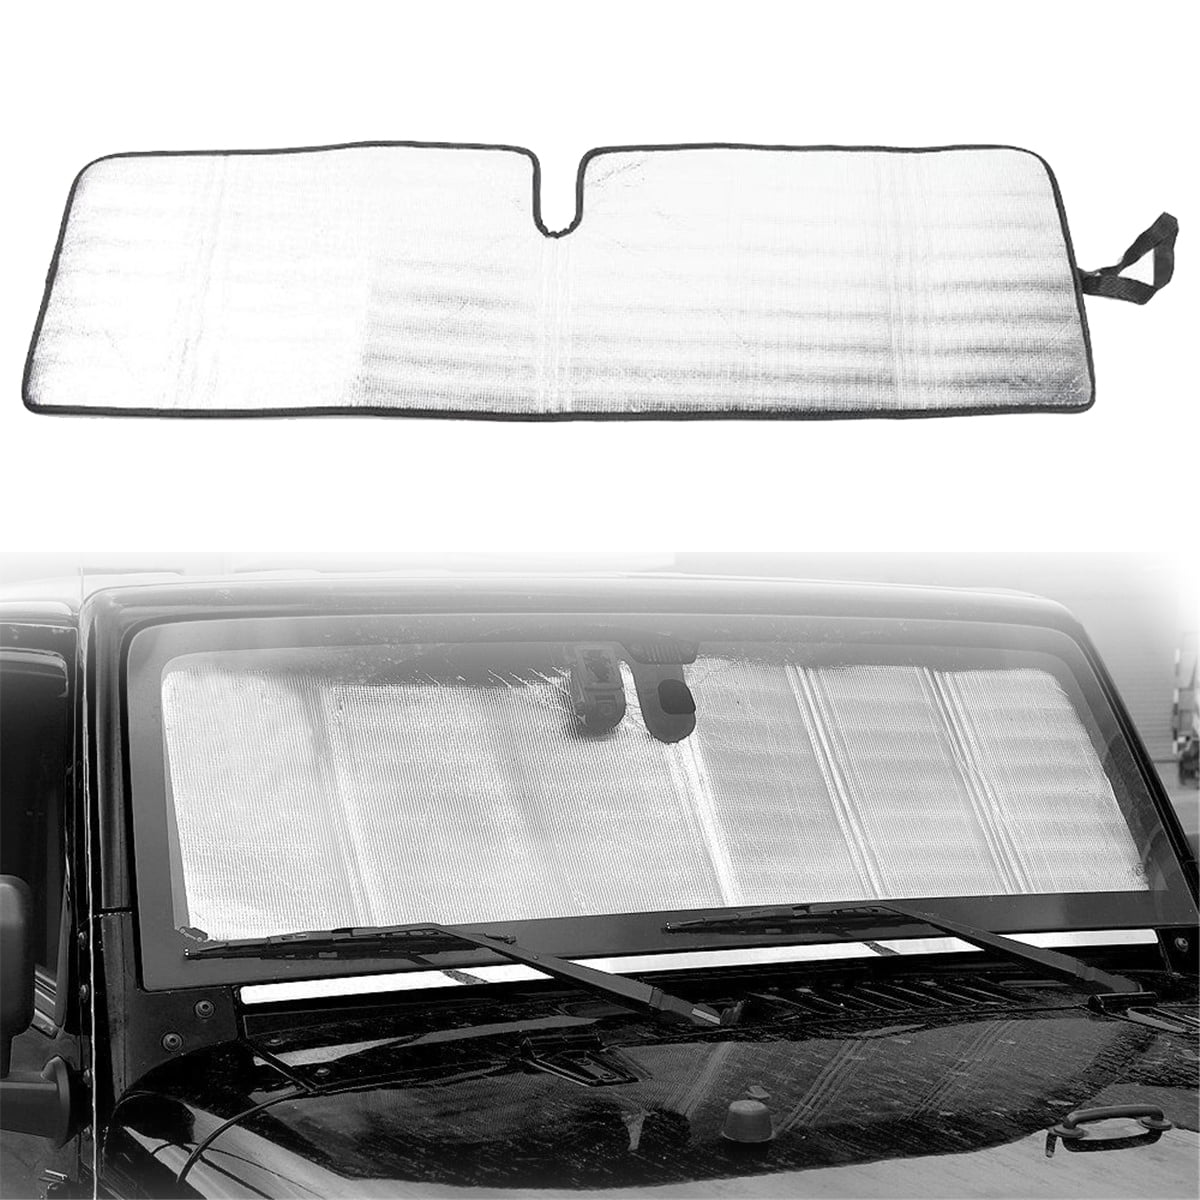 UV Protection Car Side Window Sunshade with Suction Cup Car Window Mesh Visor MiOYOOW 5 Pack Car Window Shade